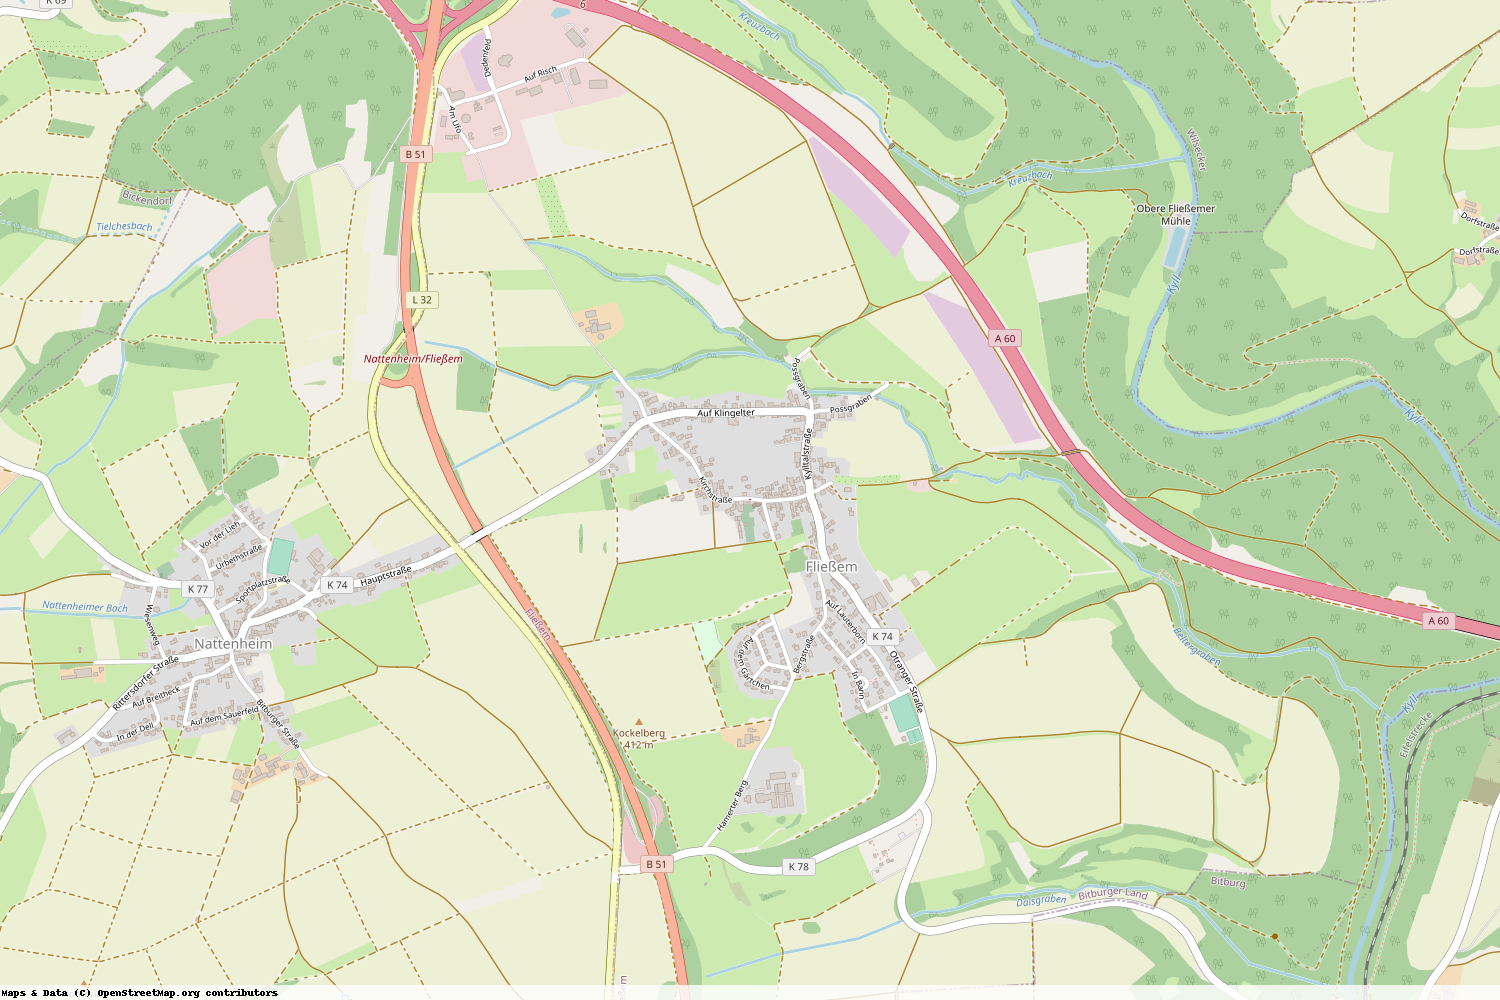 Ist gerade Stromausfall in Rheinland-Pfalz - Eifelkreis Bitburg-Prüm - Fließem?